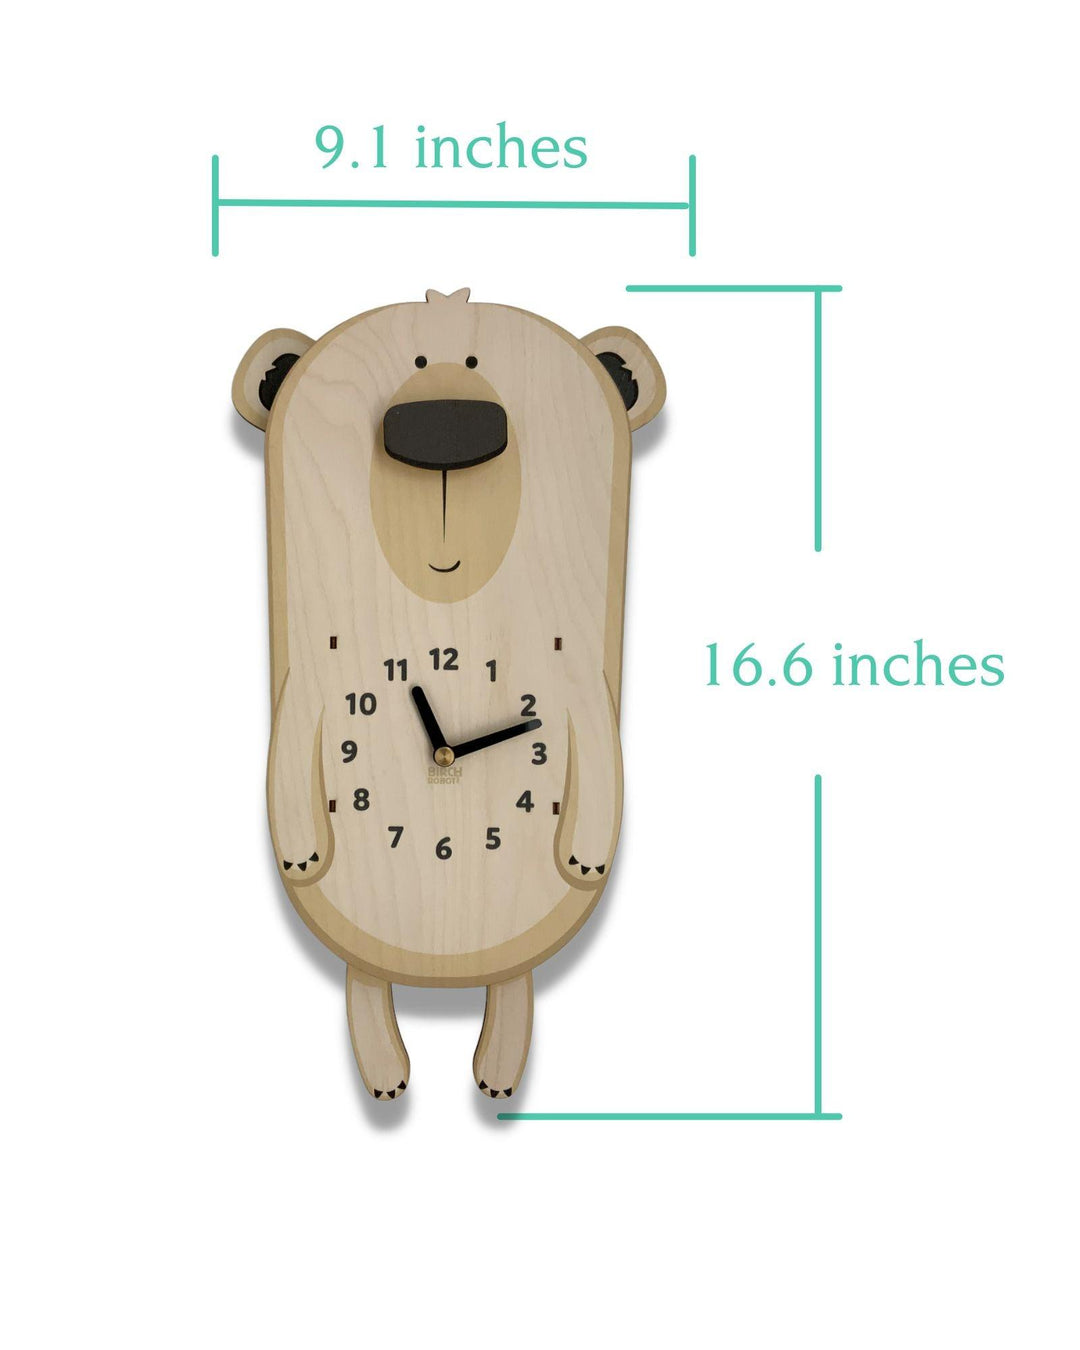 Oslo the Polar Bear Pendulum Clock - Birch Robot